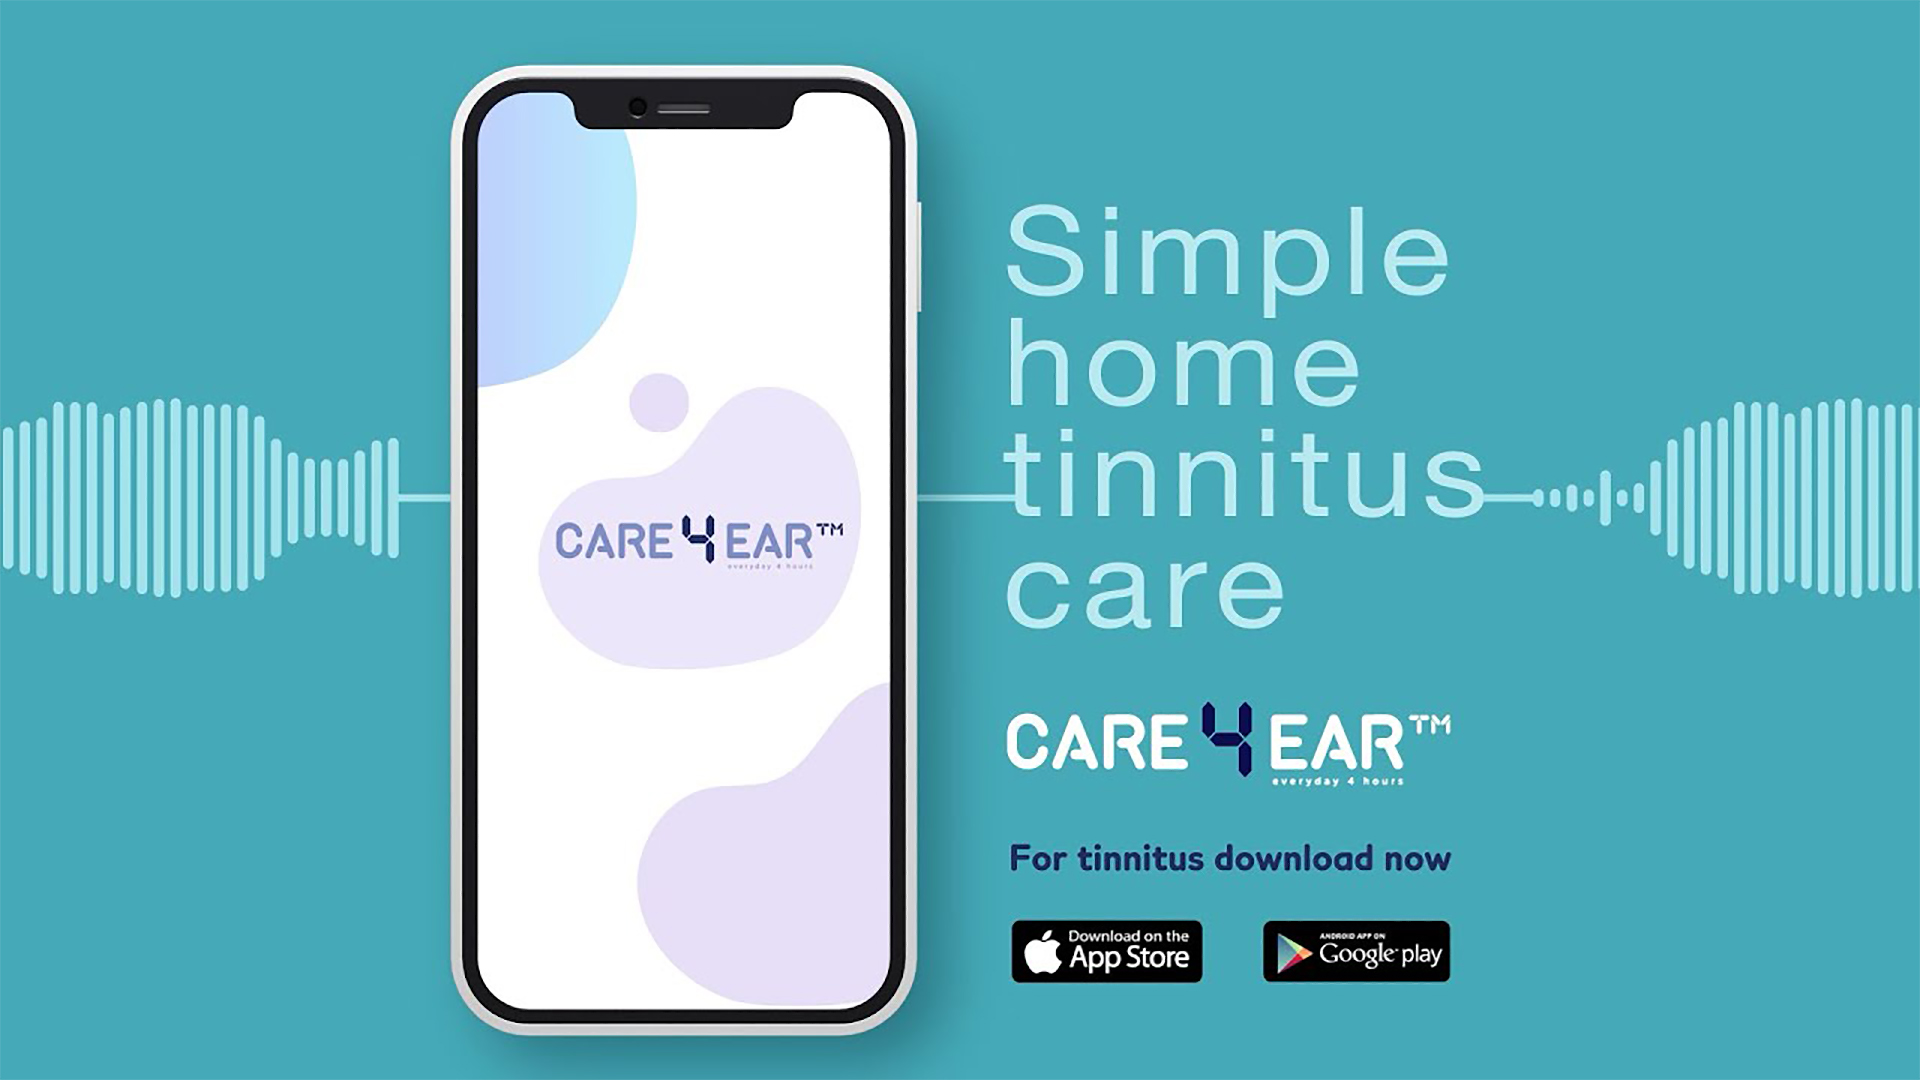 Play Video: Care4Ear, simple home tinnitus care